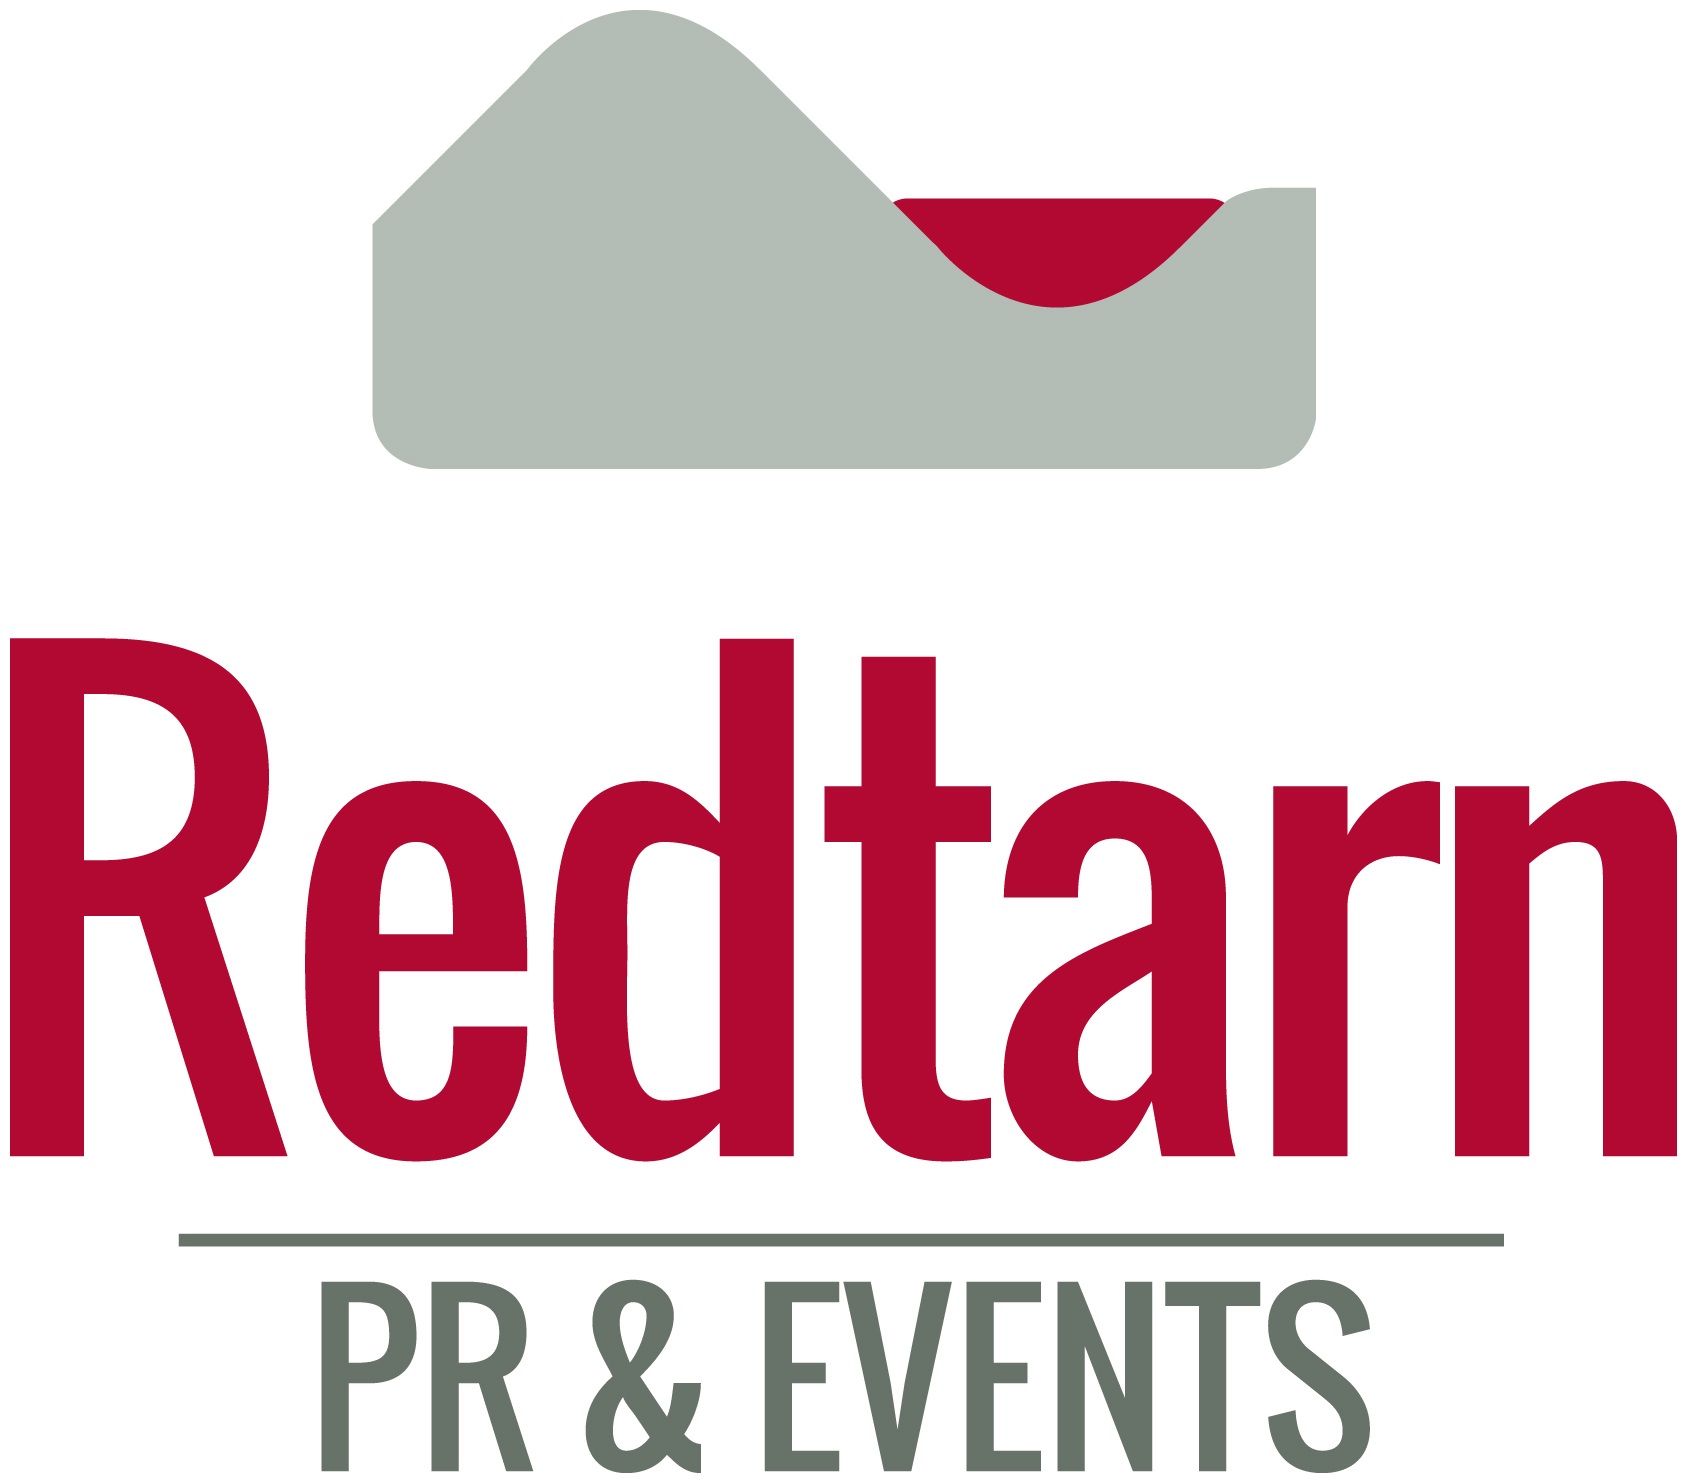 Redtarn PR & Events